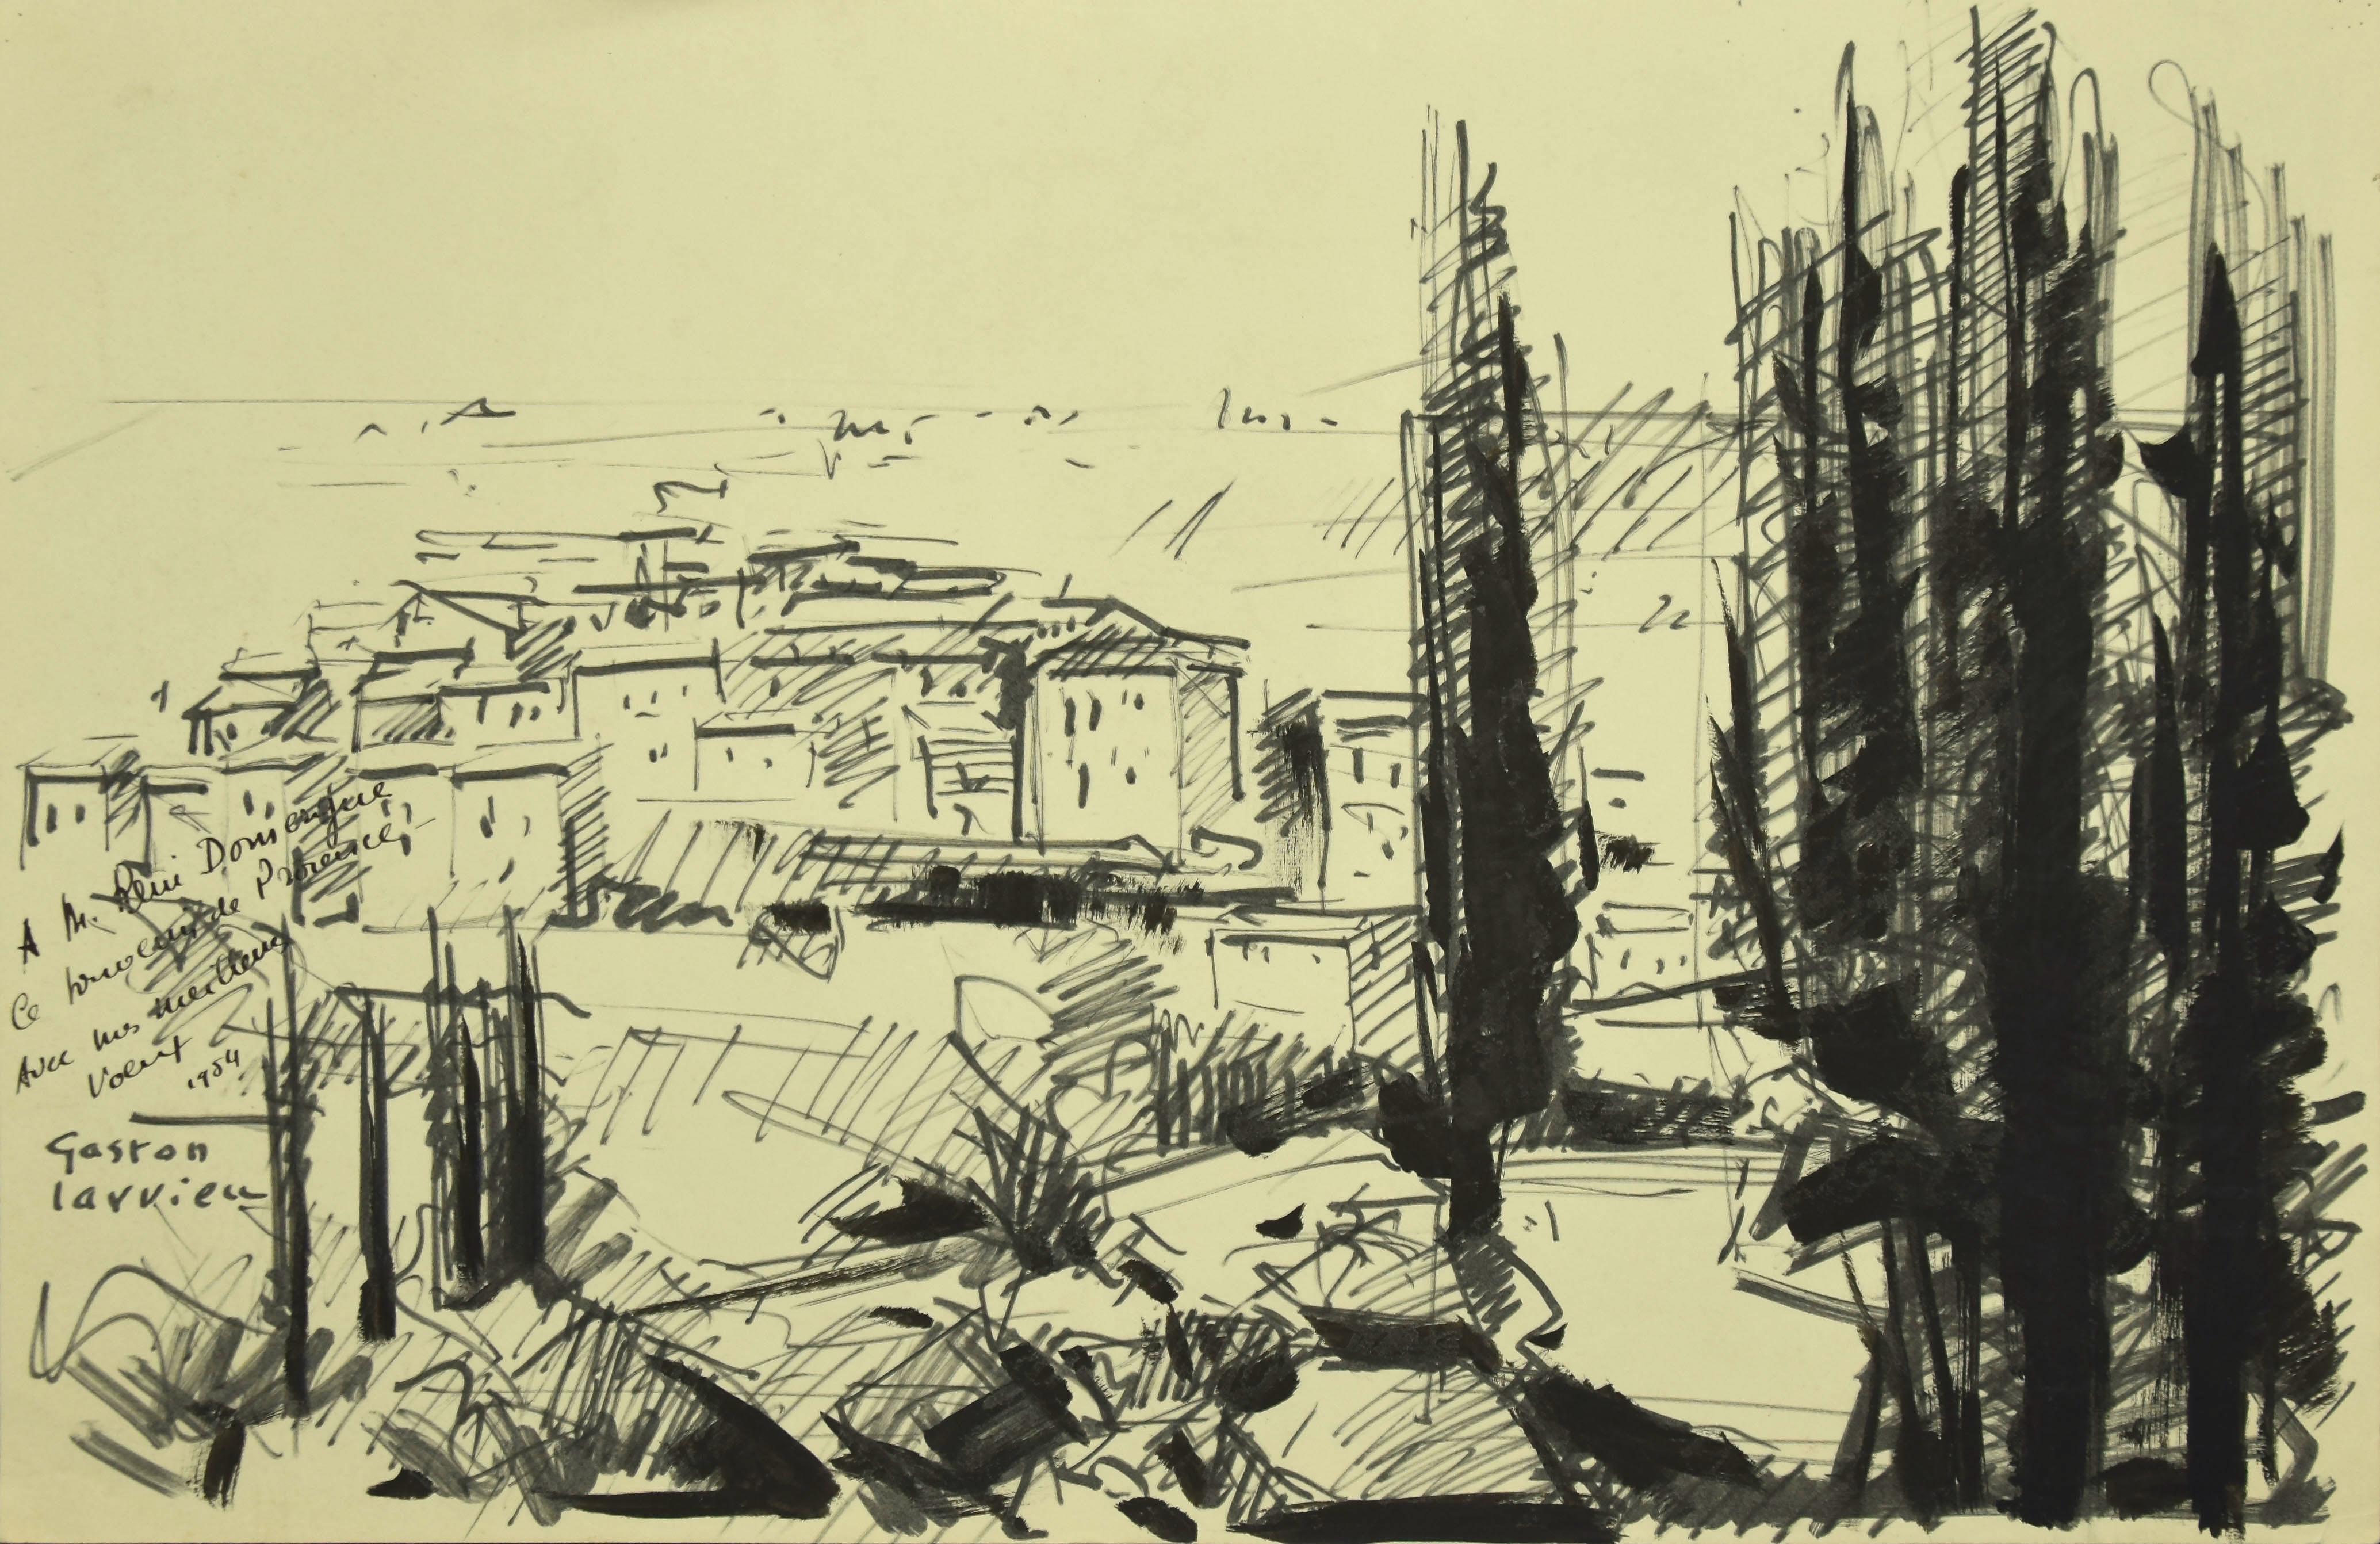 Landscape - Black Marking Pen Drawing by G. Laurieu - 1954